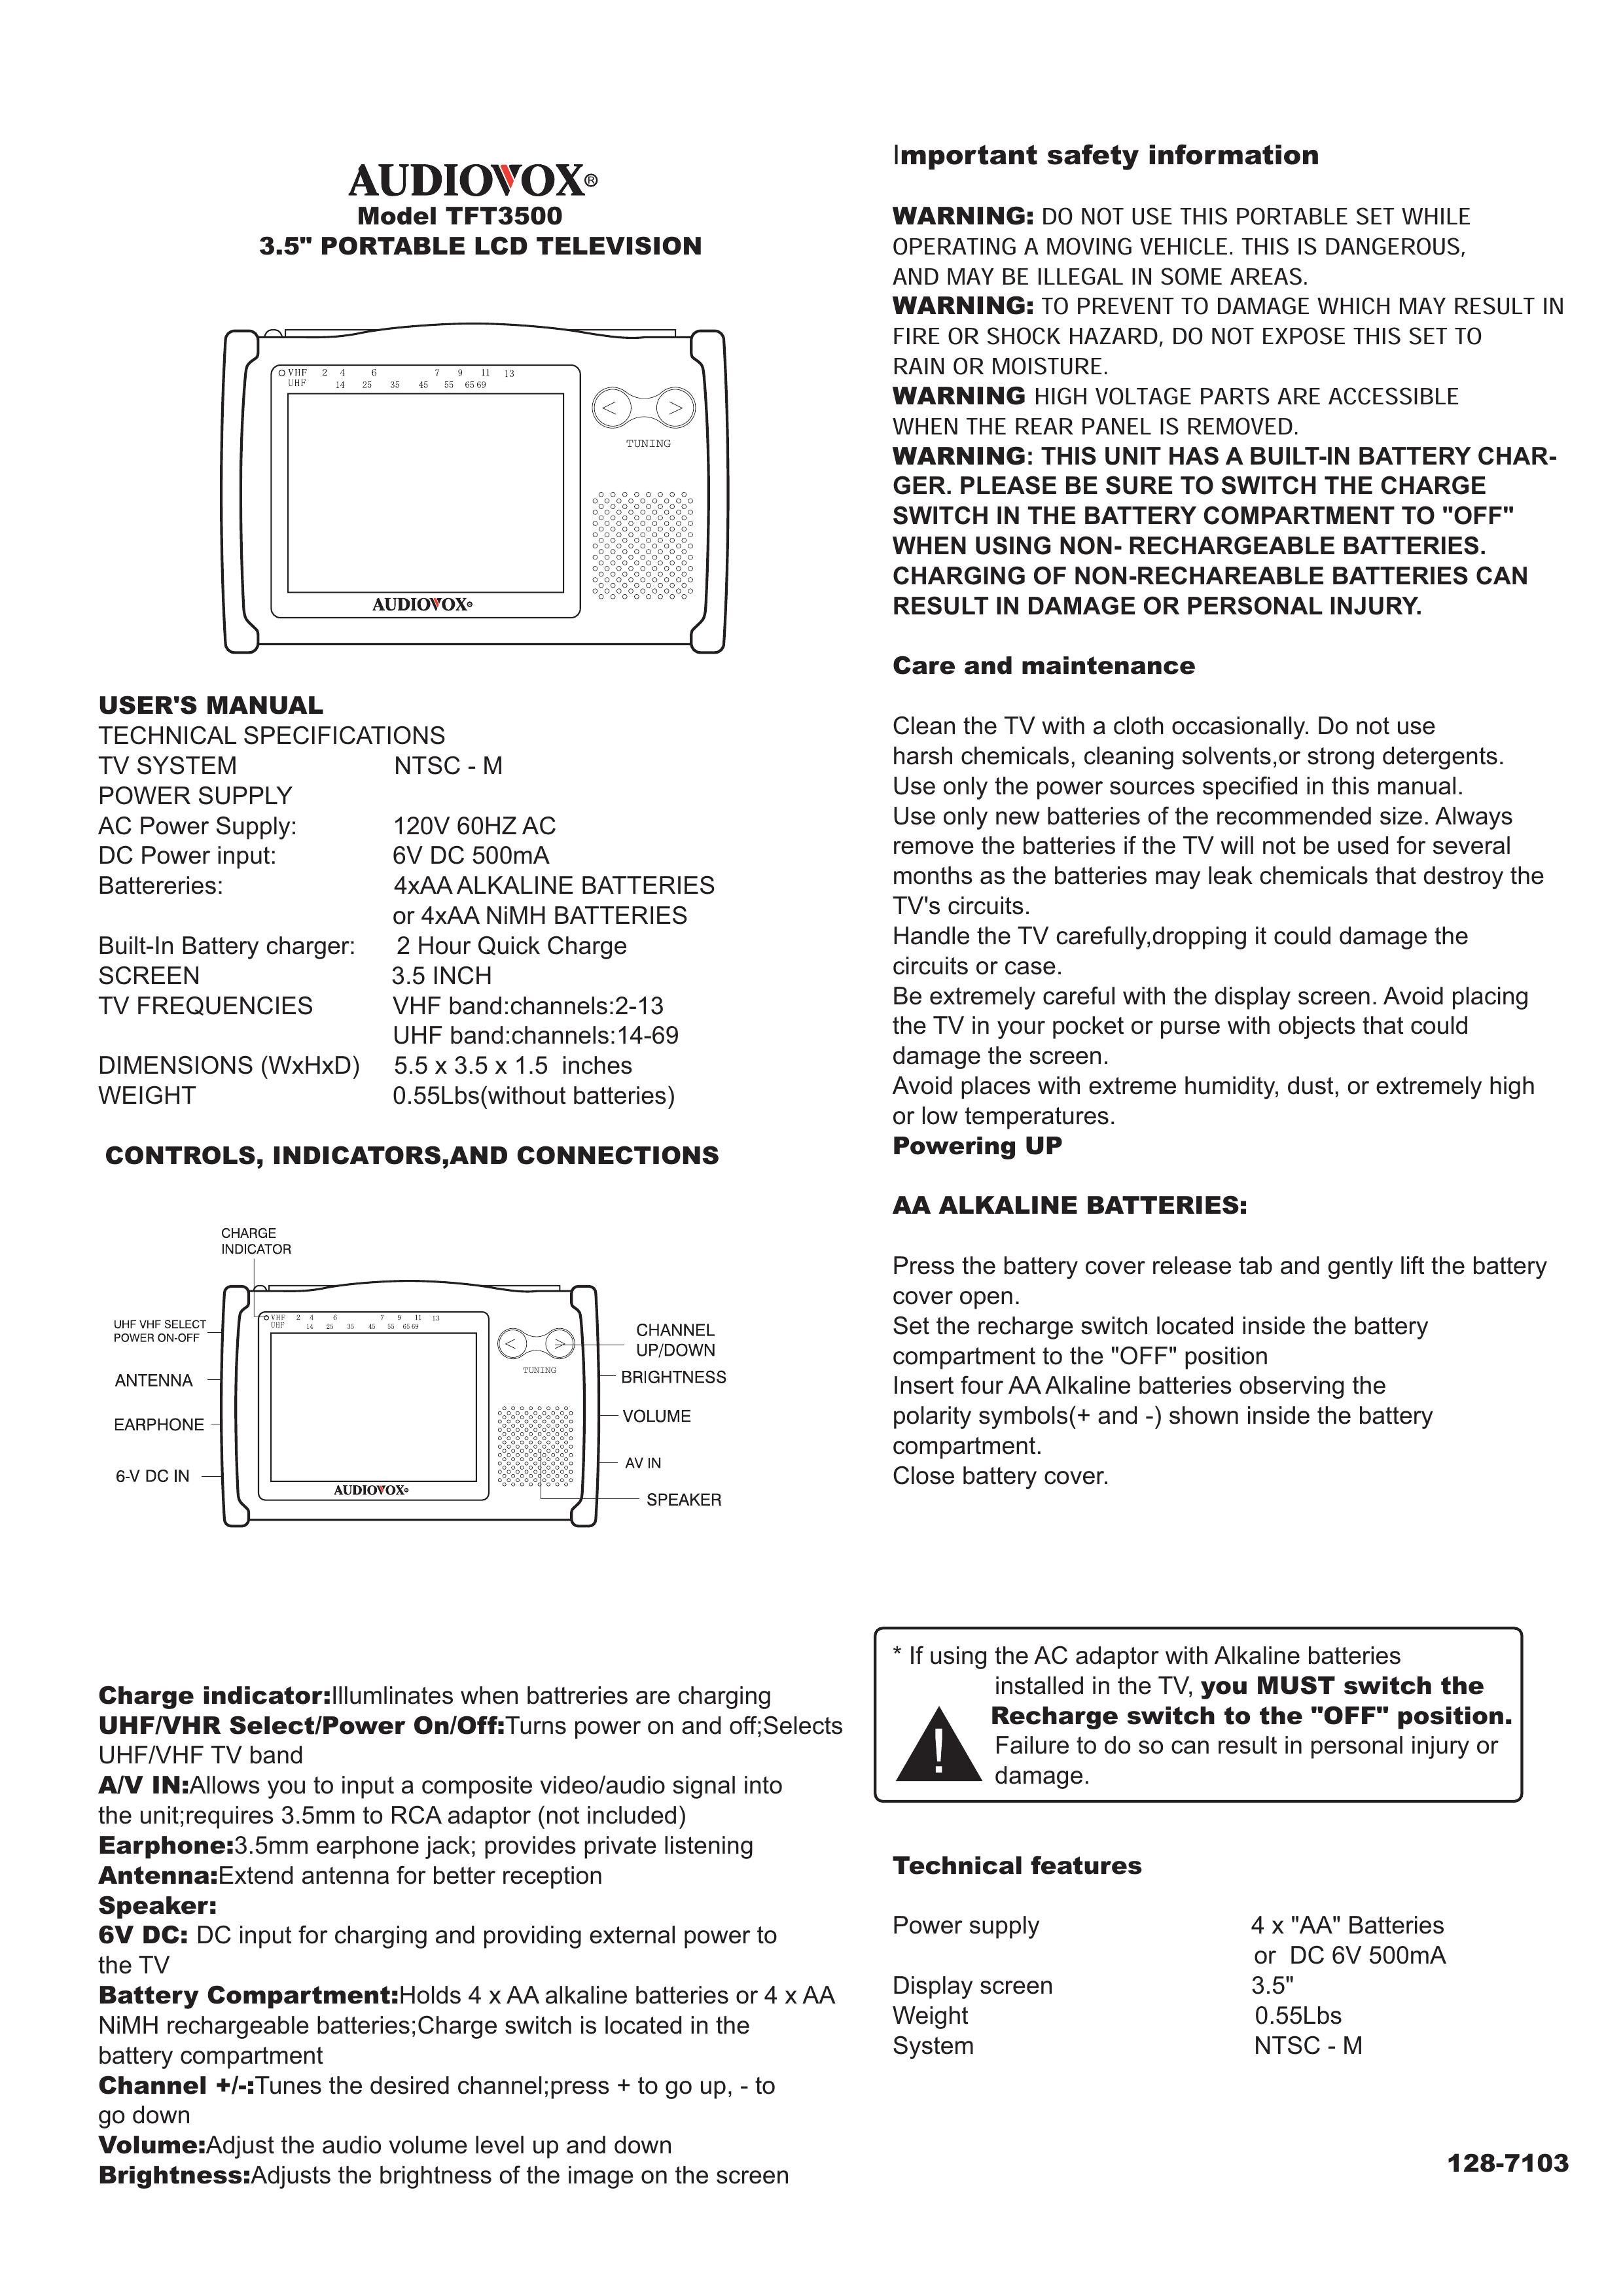 Audiovox TFT3500 Handheld TV User Manual